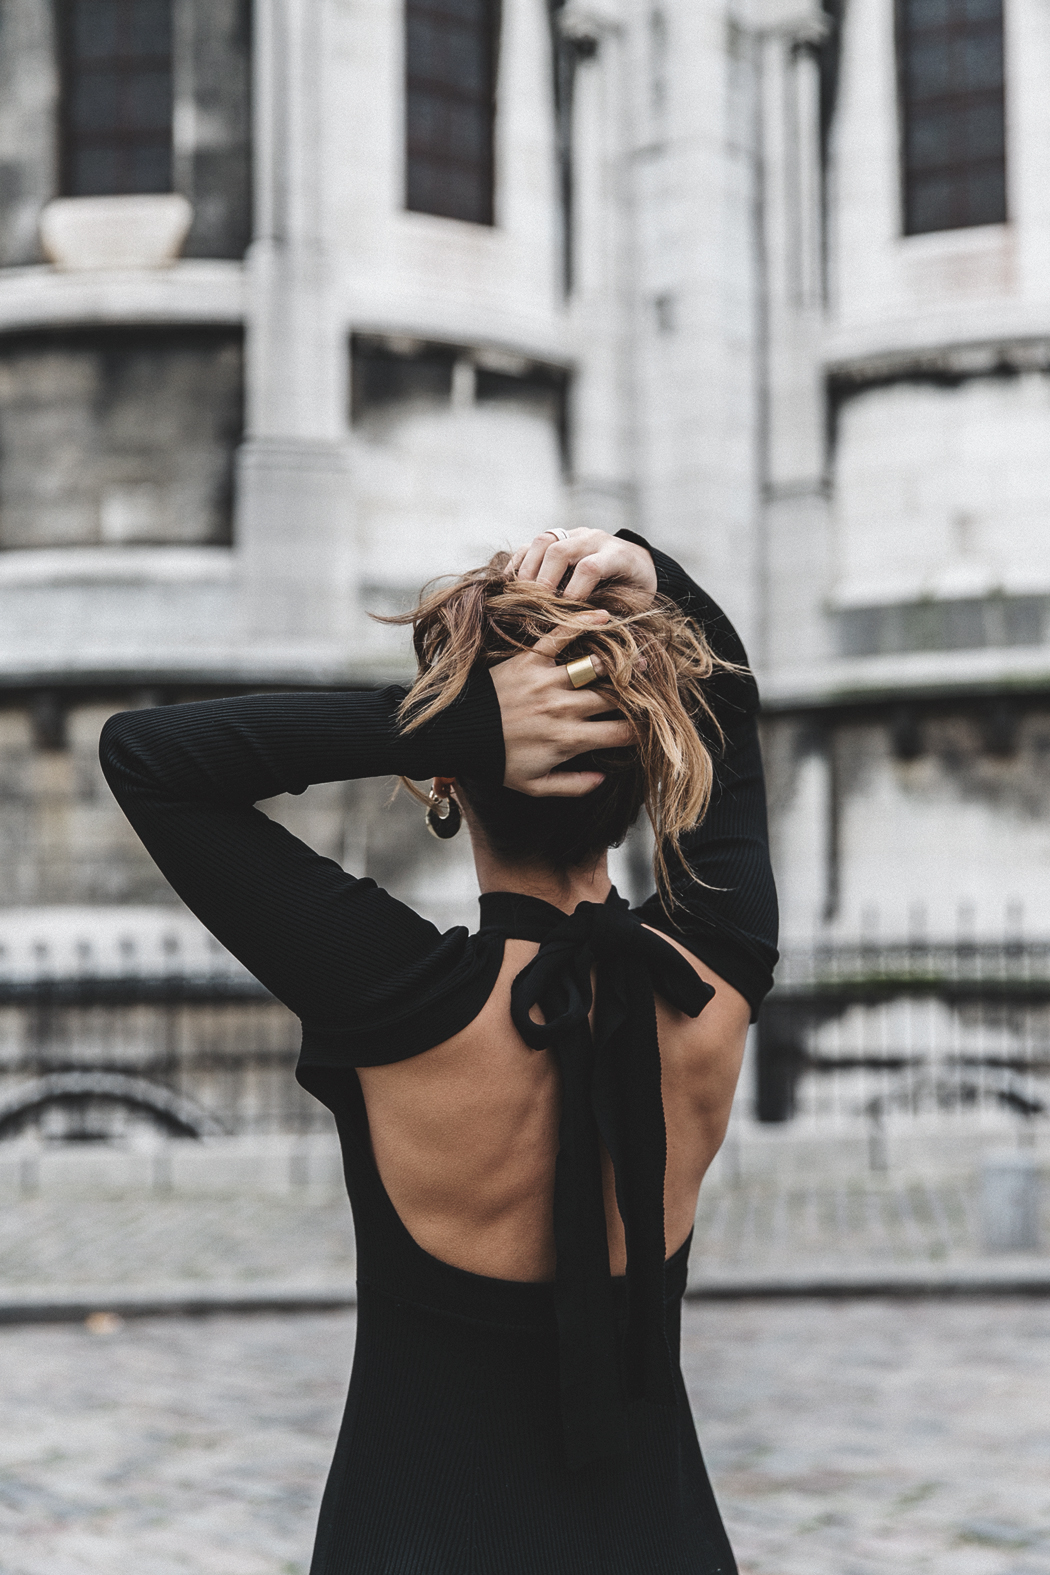 Backless_Dress-Black_Dress-Chanel_Shoes-Paris-PFW-Paris_Fashion_Week_Fall_2016-27